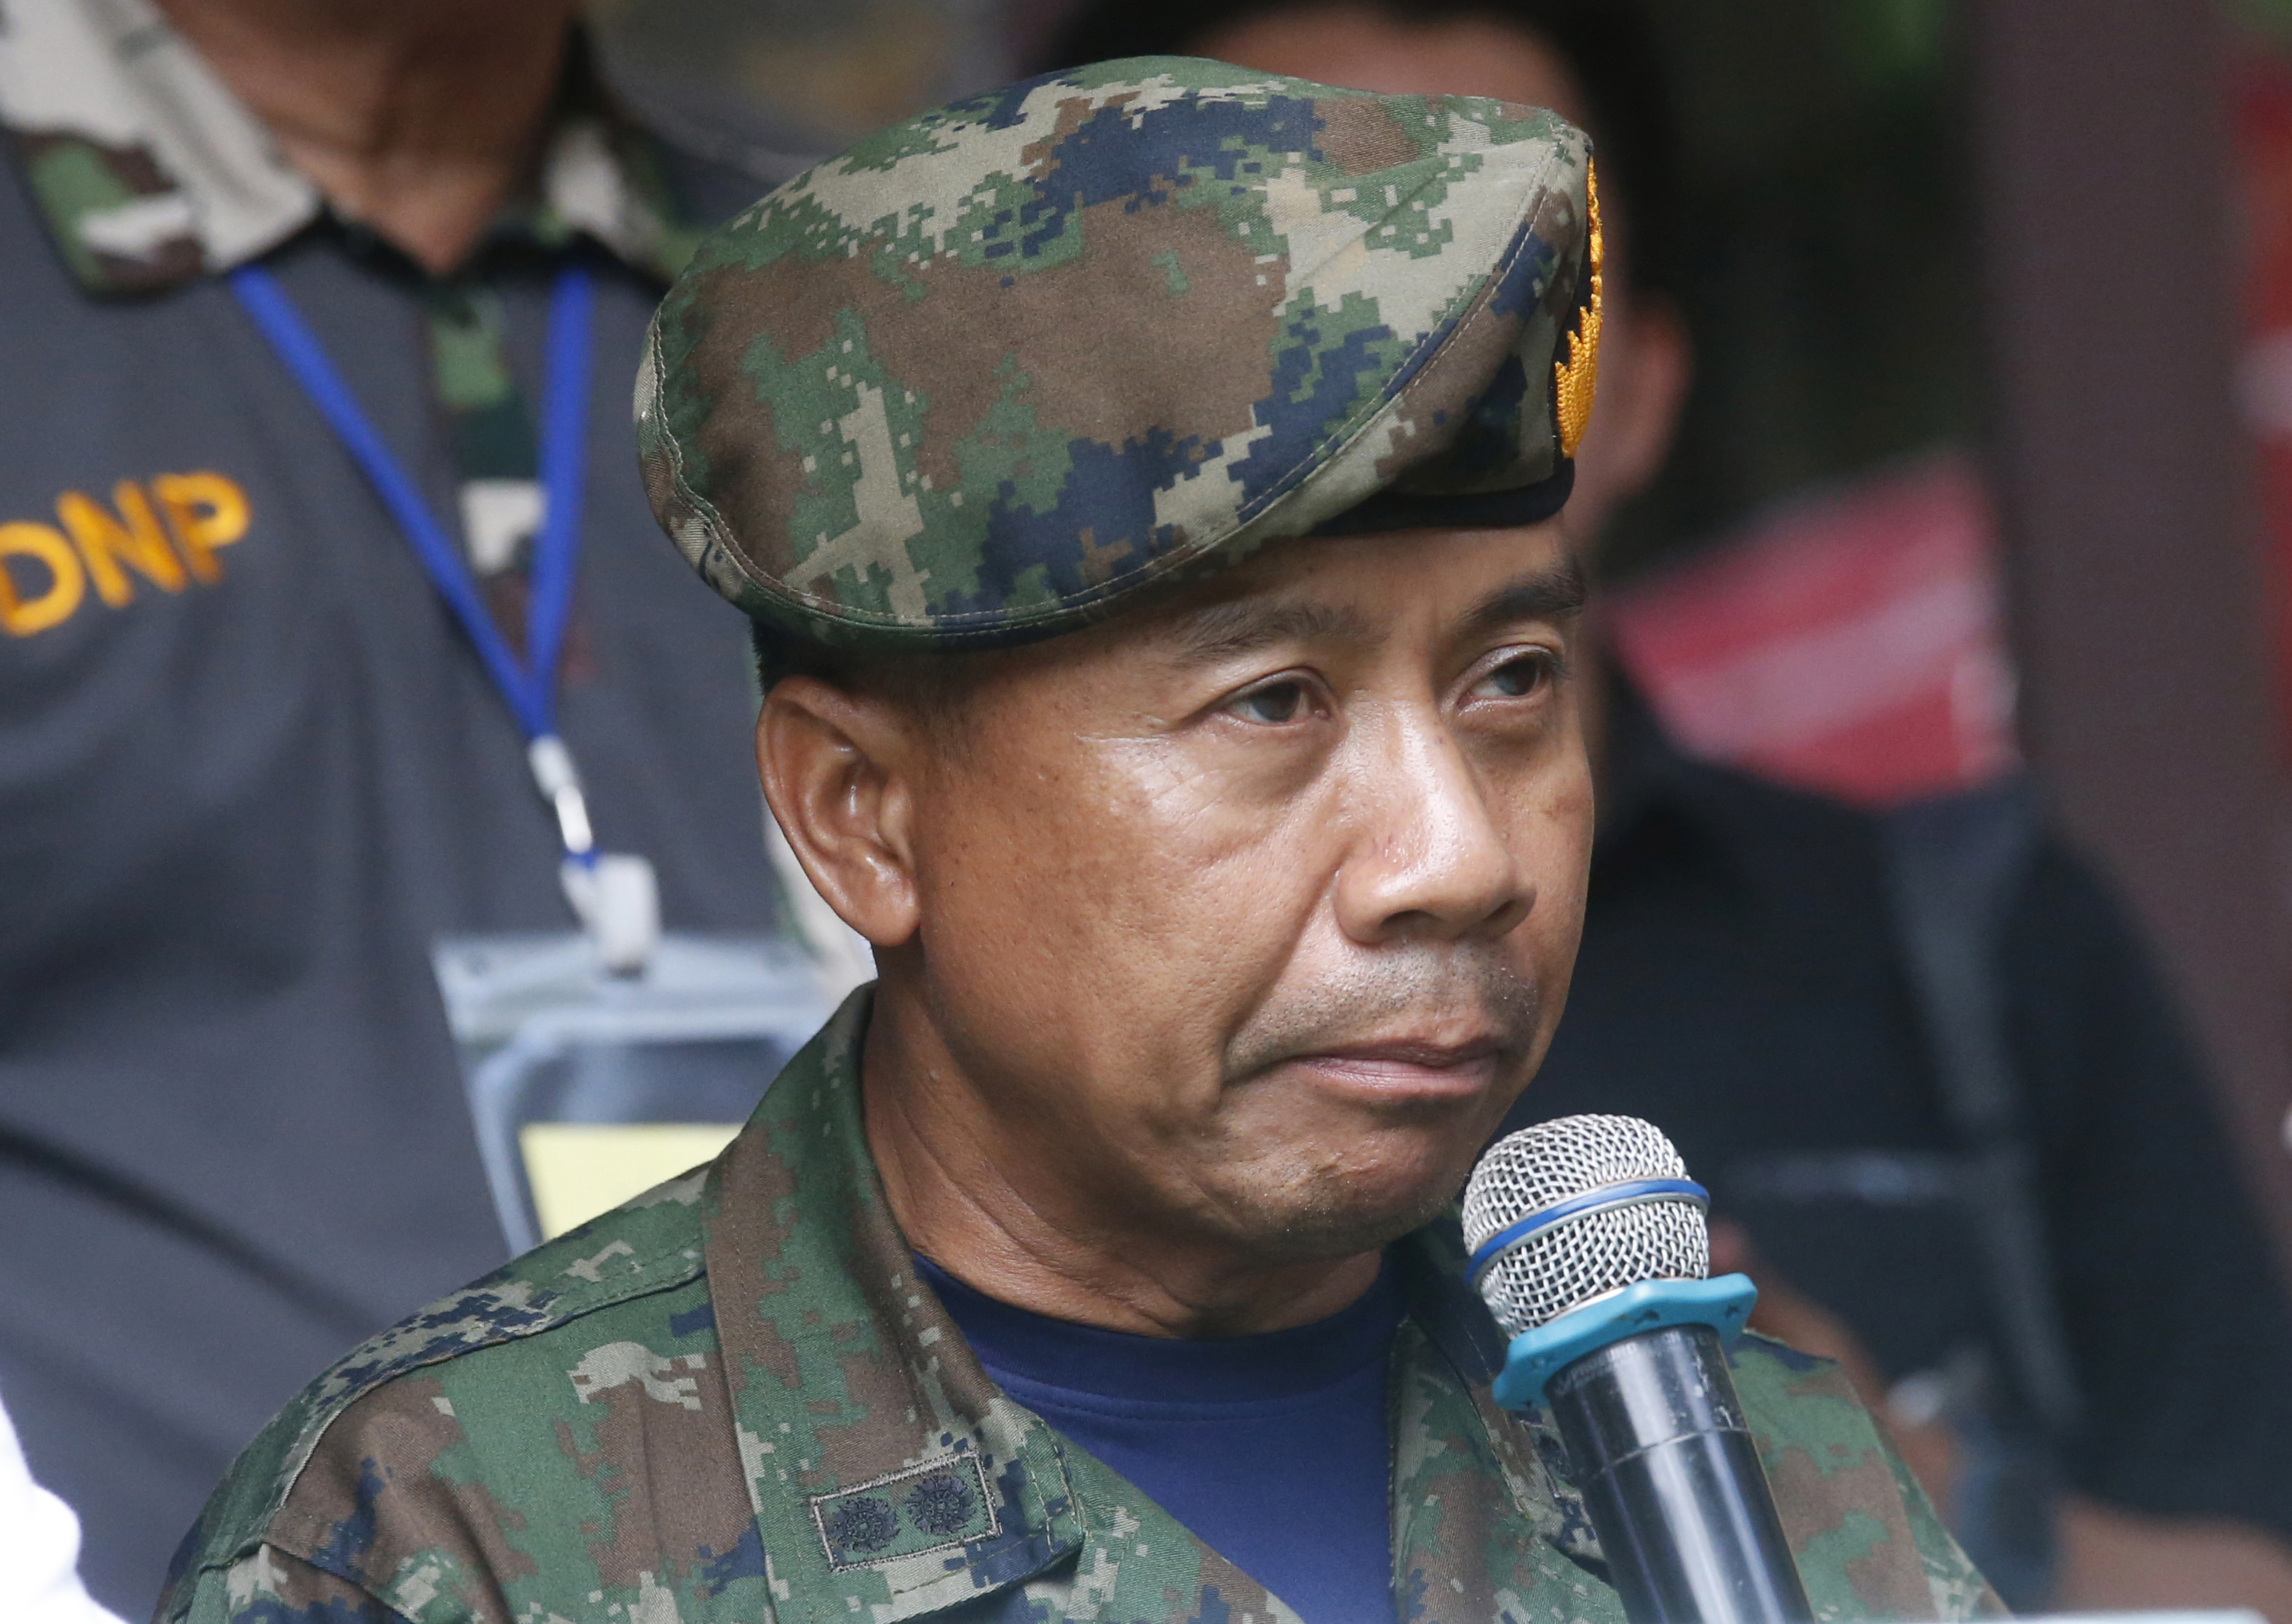 Thai Seals commander Arpakorn Yookongkaew